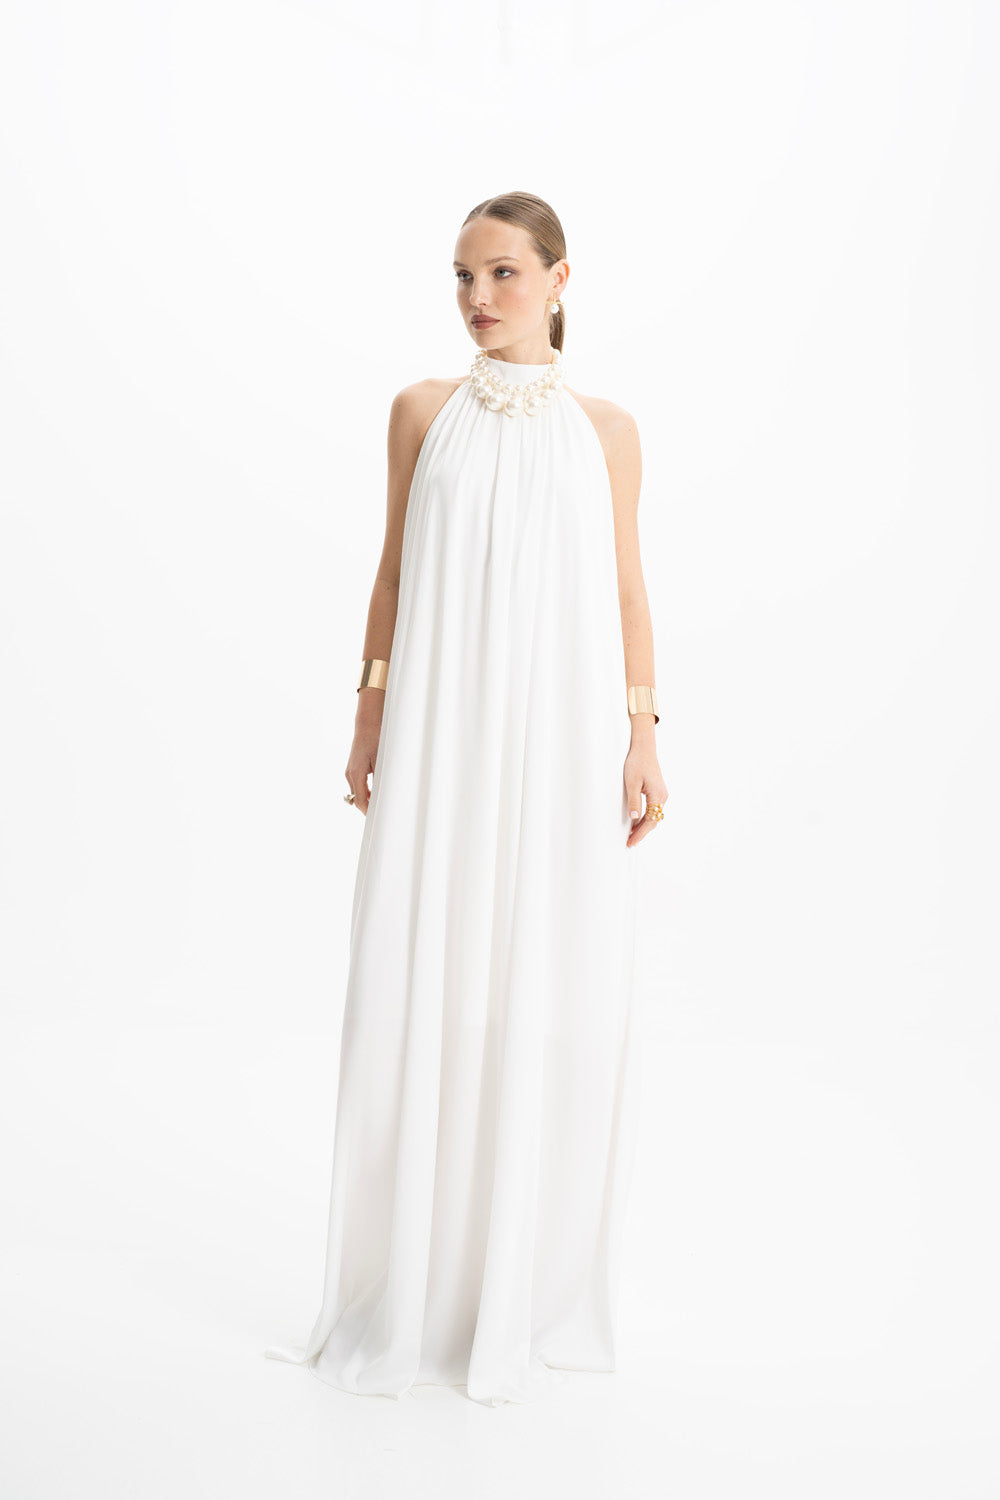 Pam Satin White Halter Maxi Dress